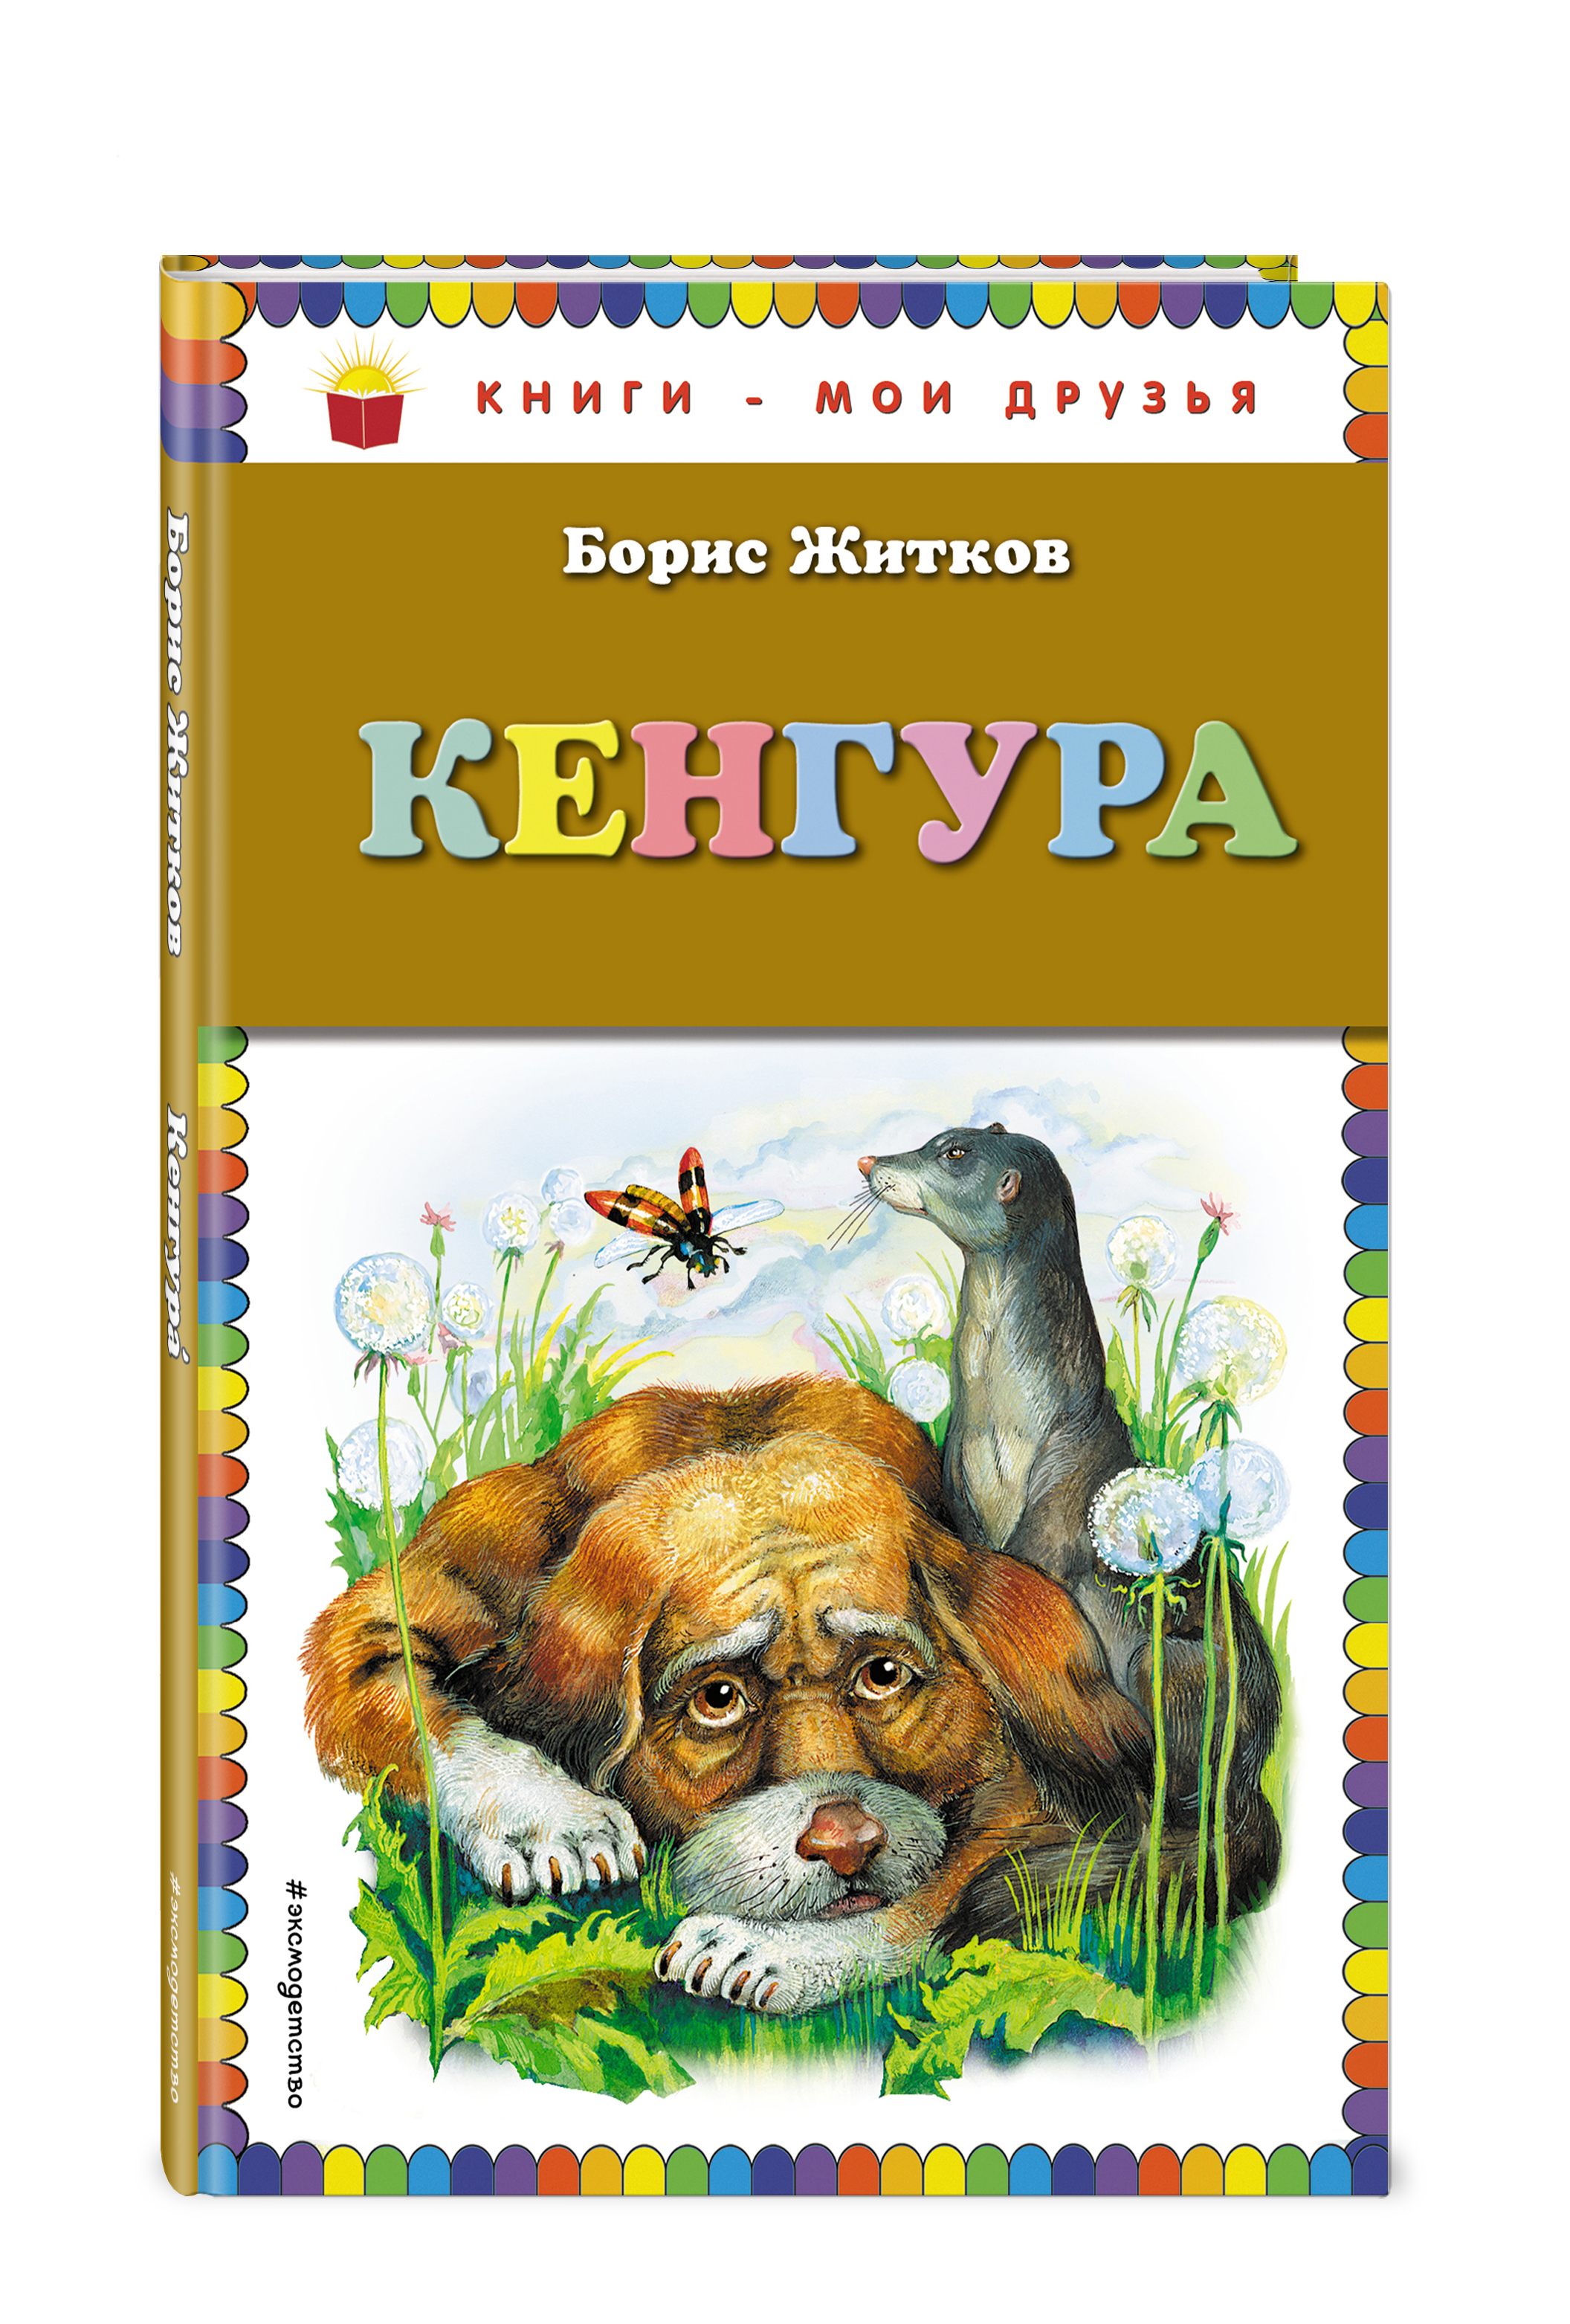 Книги Бориса Житкова для детей